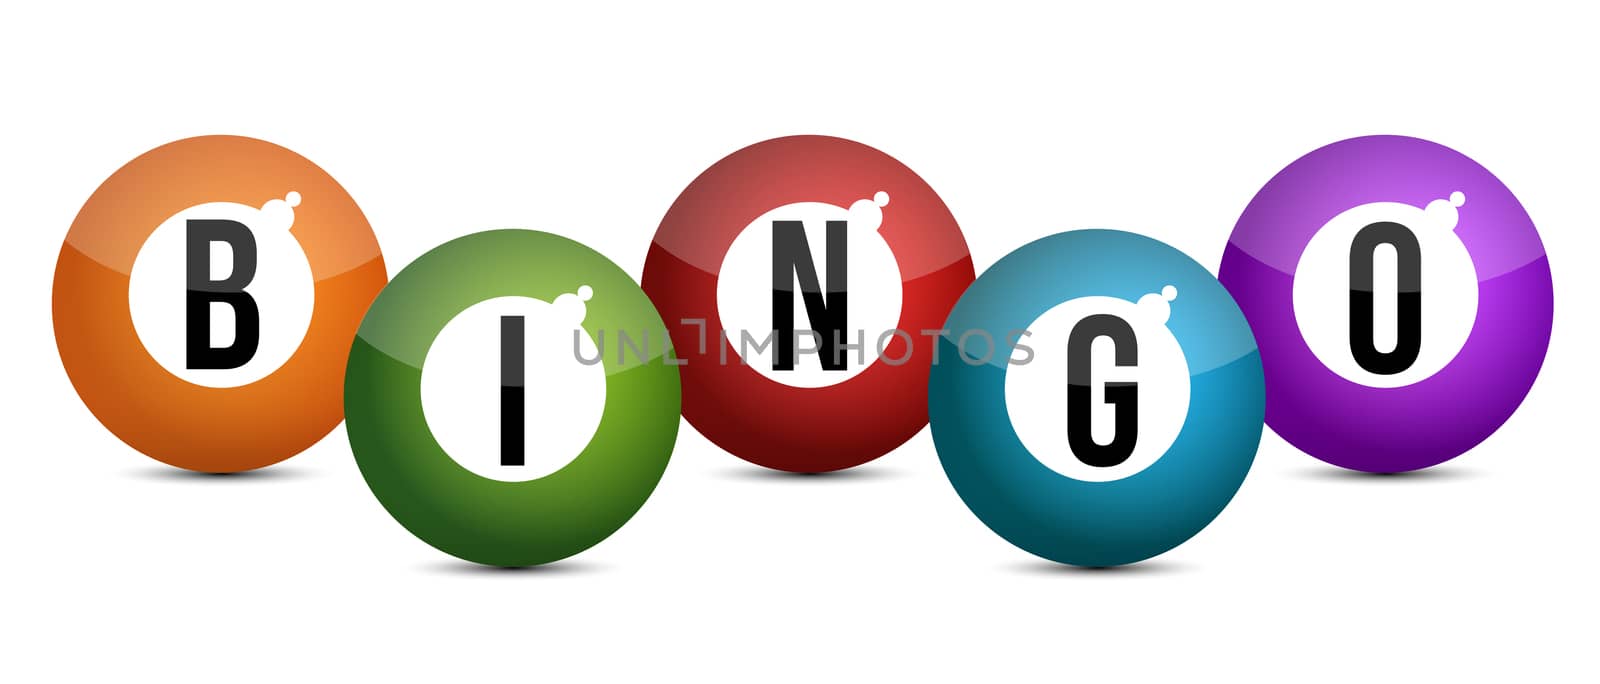 brightly coloured bingo balls illustration design by alexmillos